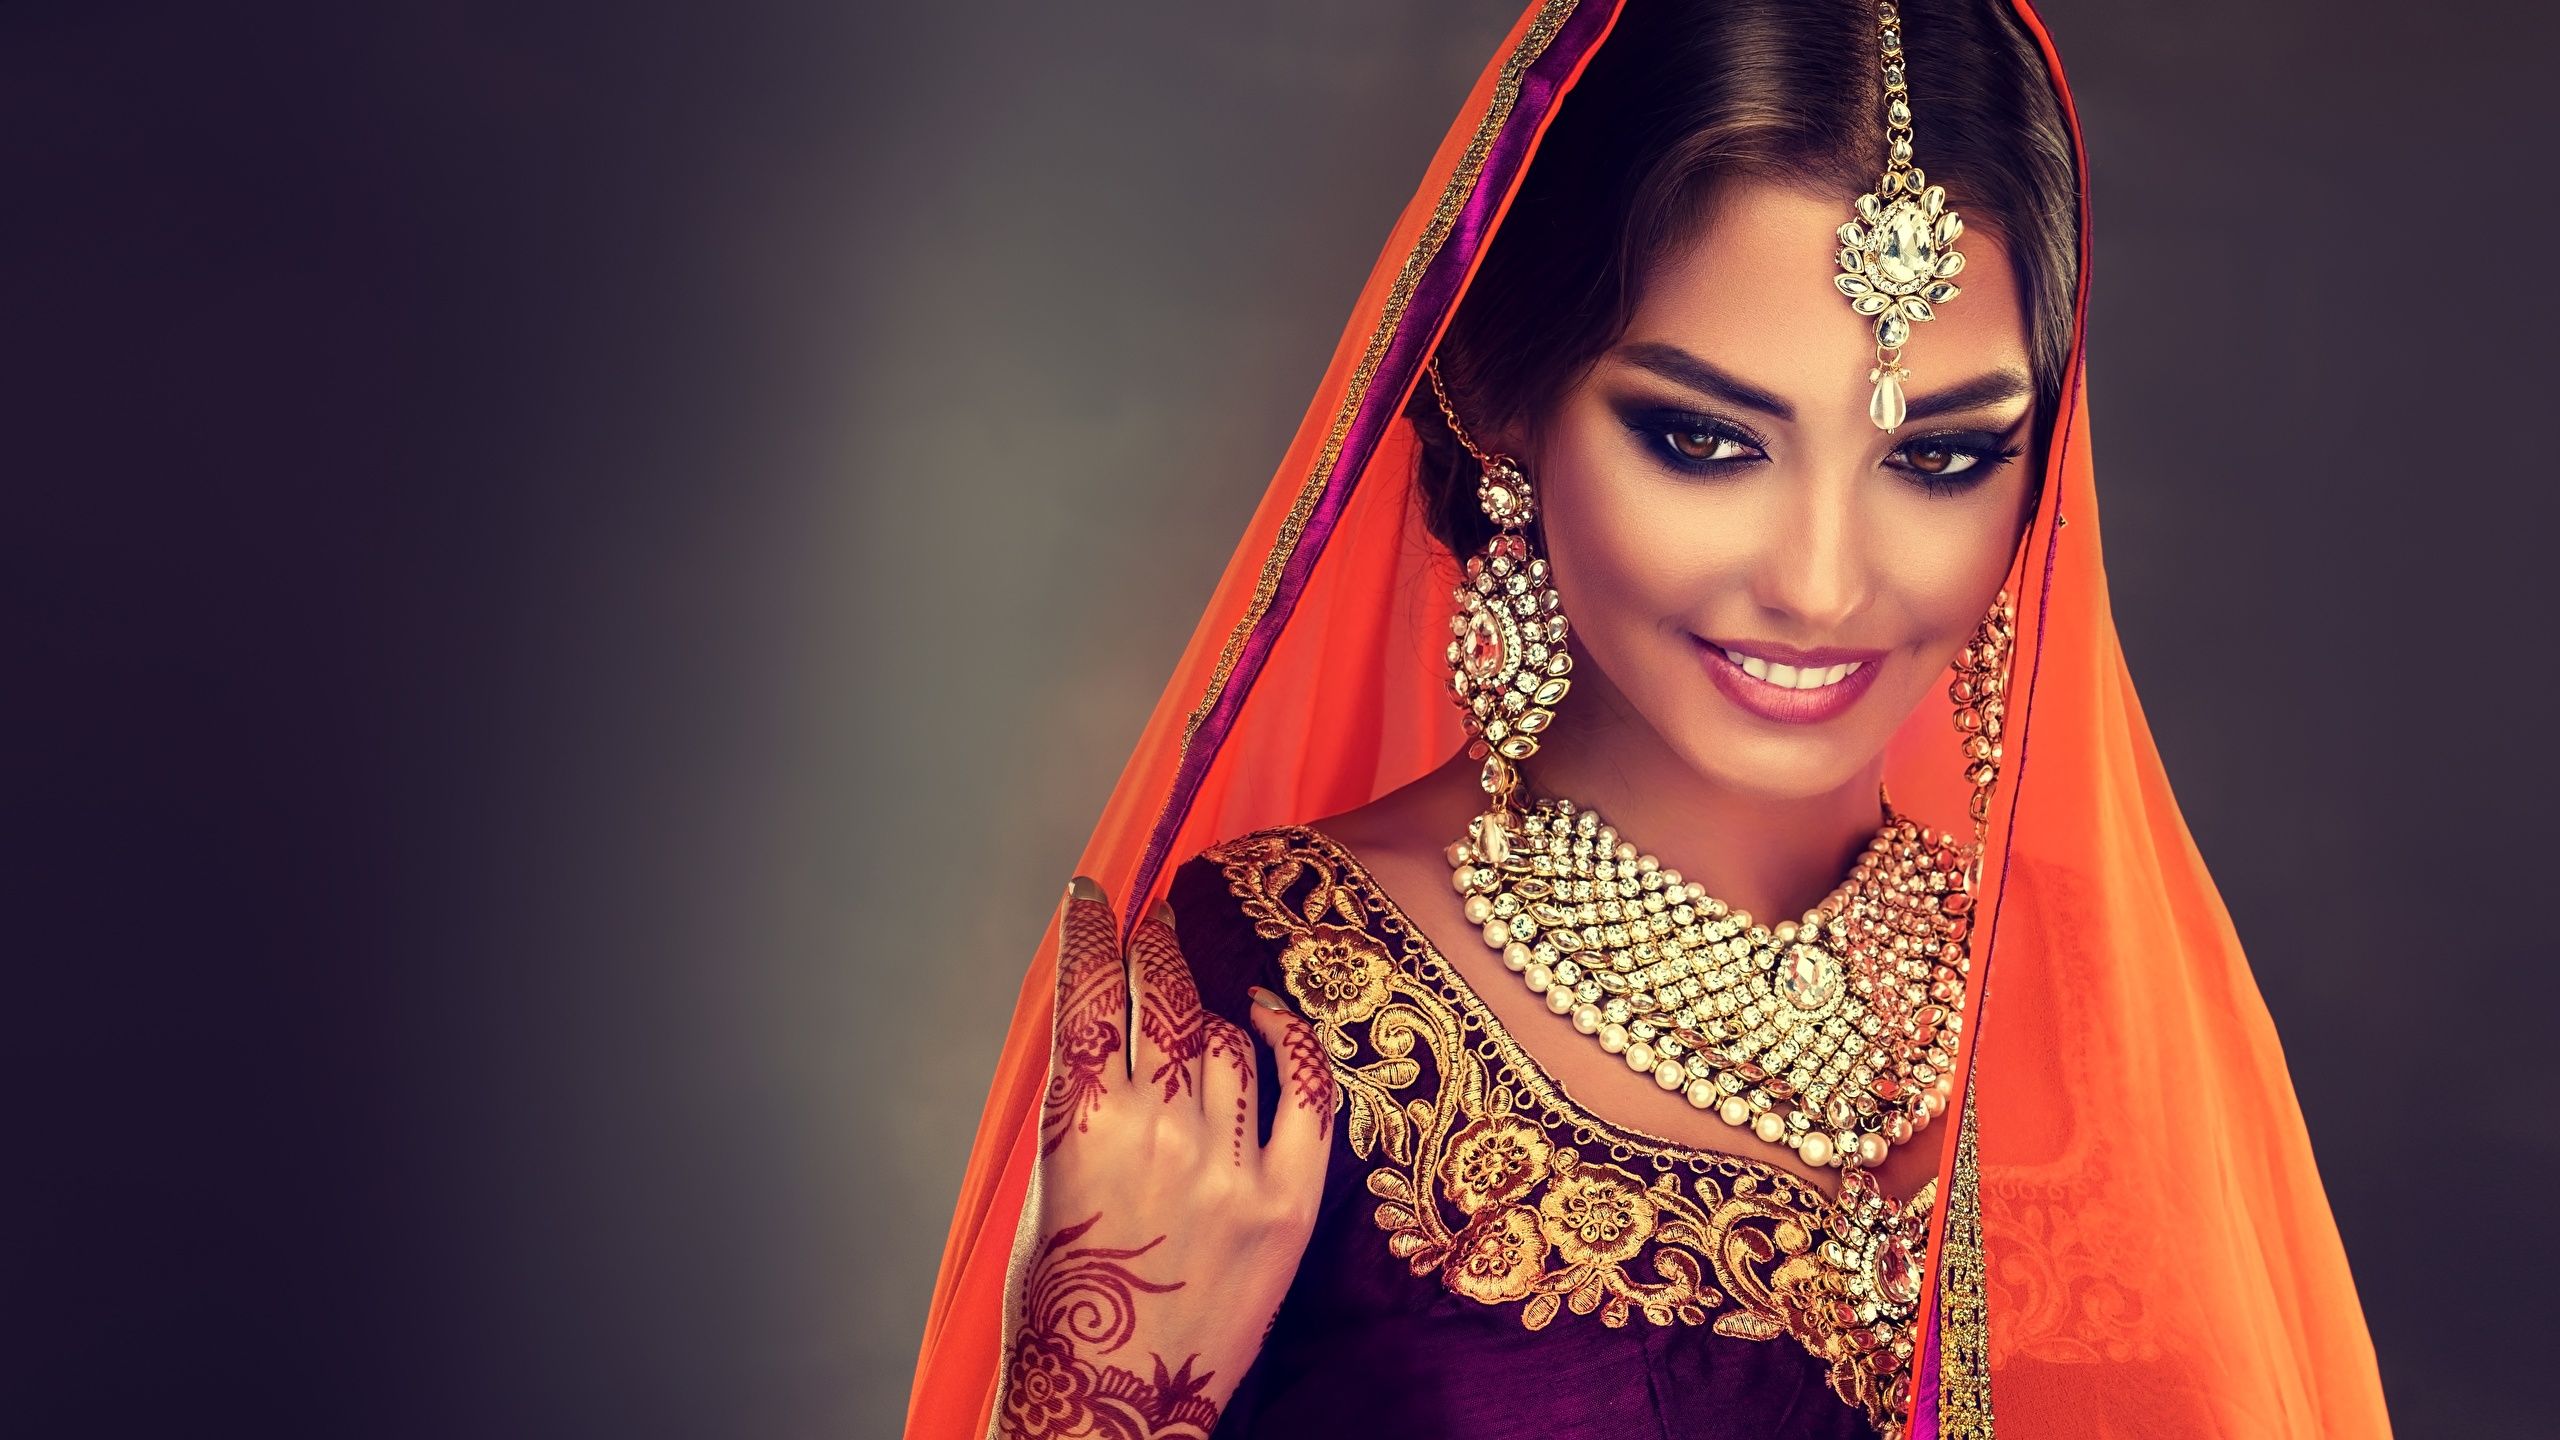 Desktop Wallpaper young woman Indian Smile Beautiful 2560x1440